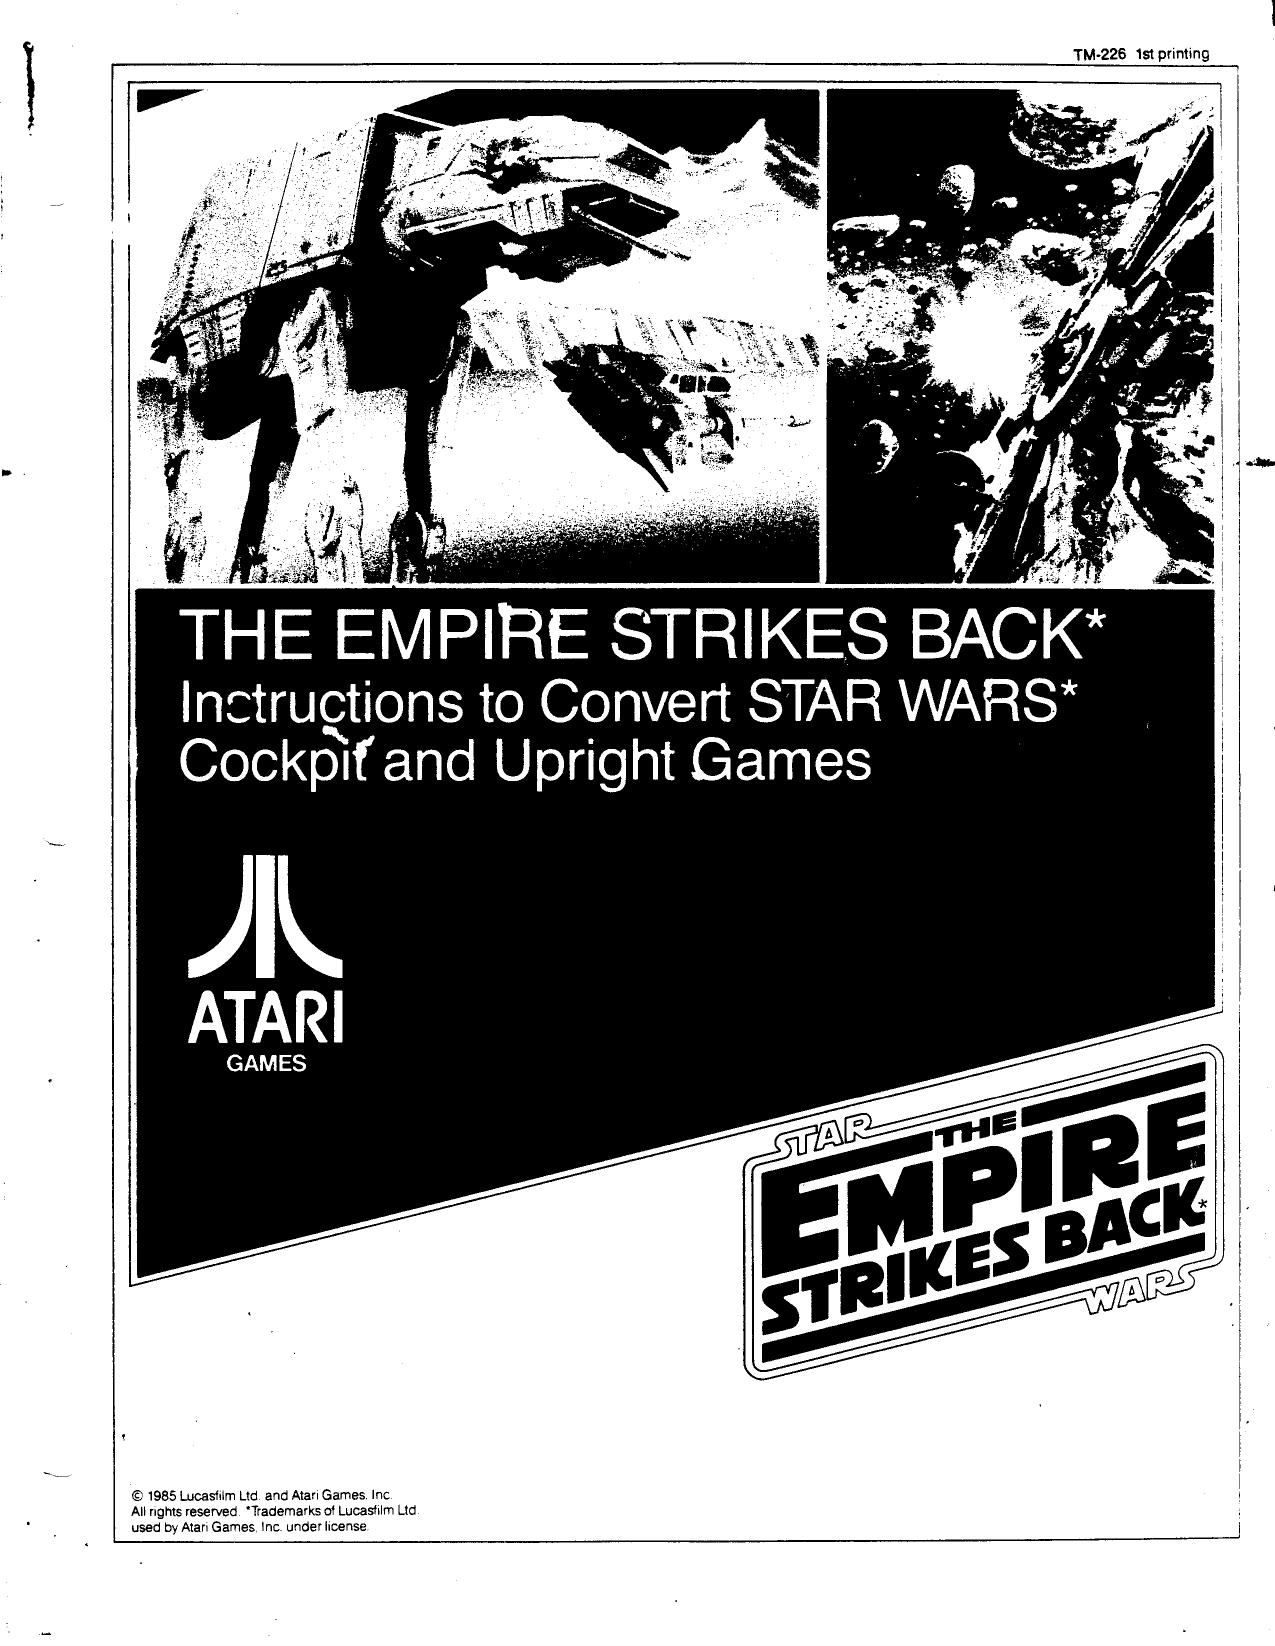 Empire Strikes Back Conversion TM-226 1st Printing